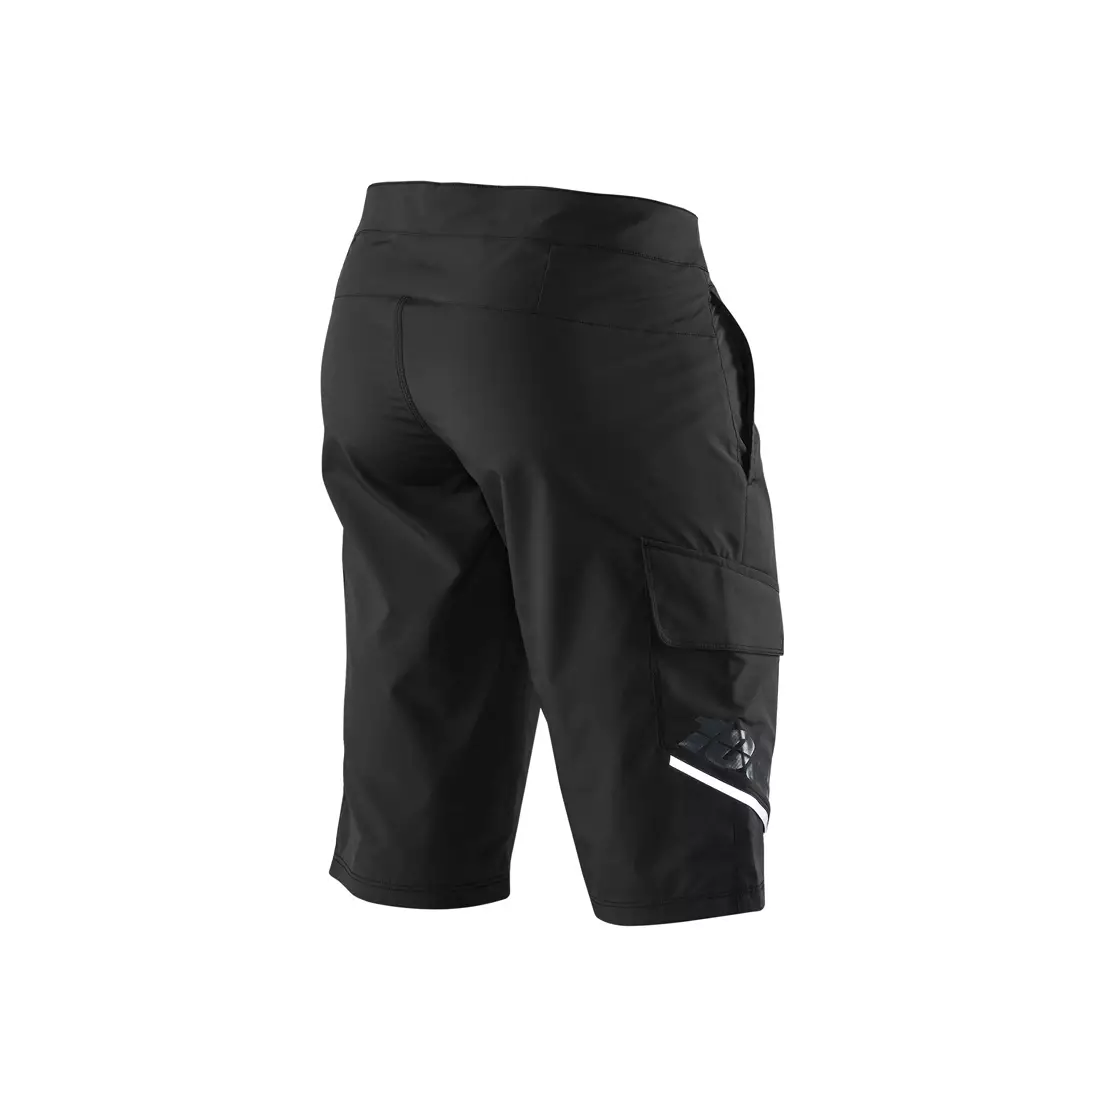 100% men's cycling shorts ridecamp black STO-42401-001-28